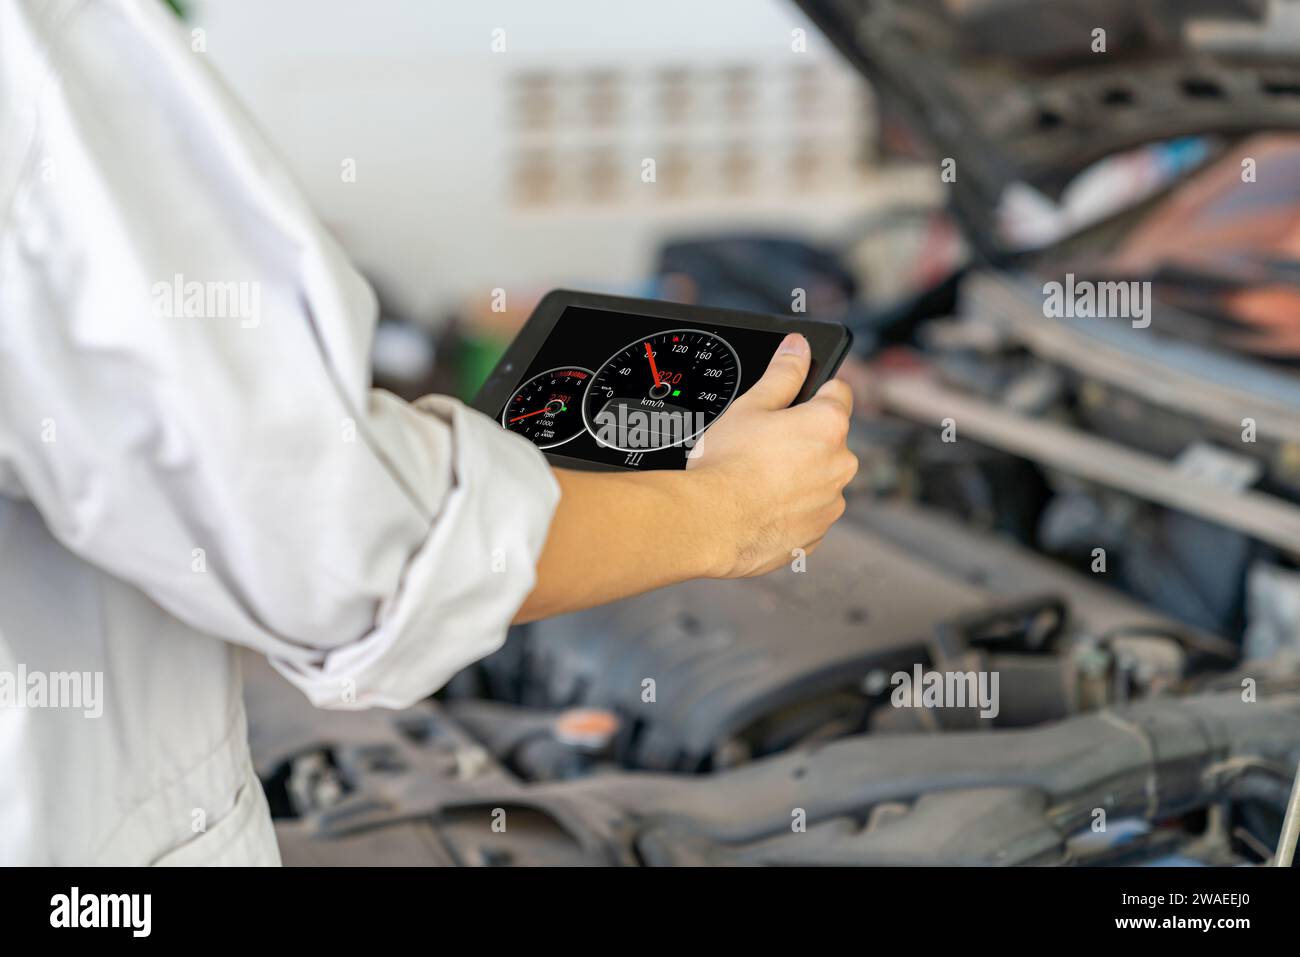 Mechaniker hören Motor mit Stethoskop in Werkstatt Stockfotografie - Alamy